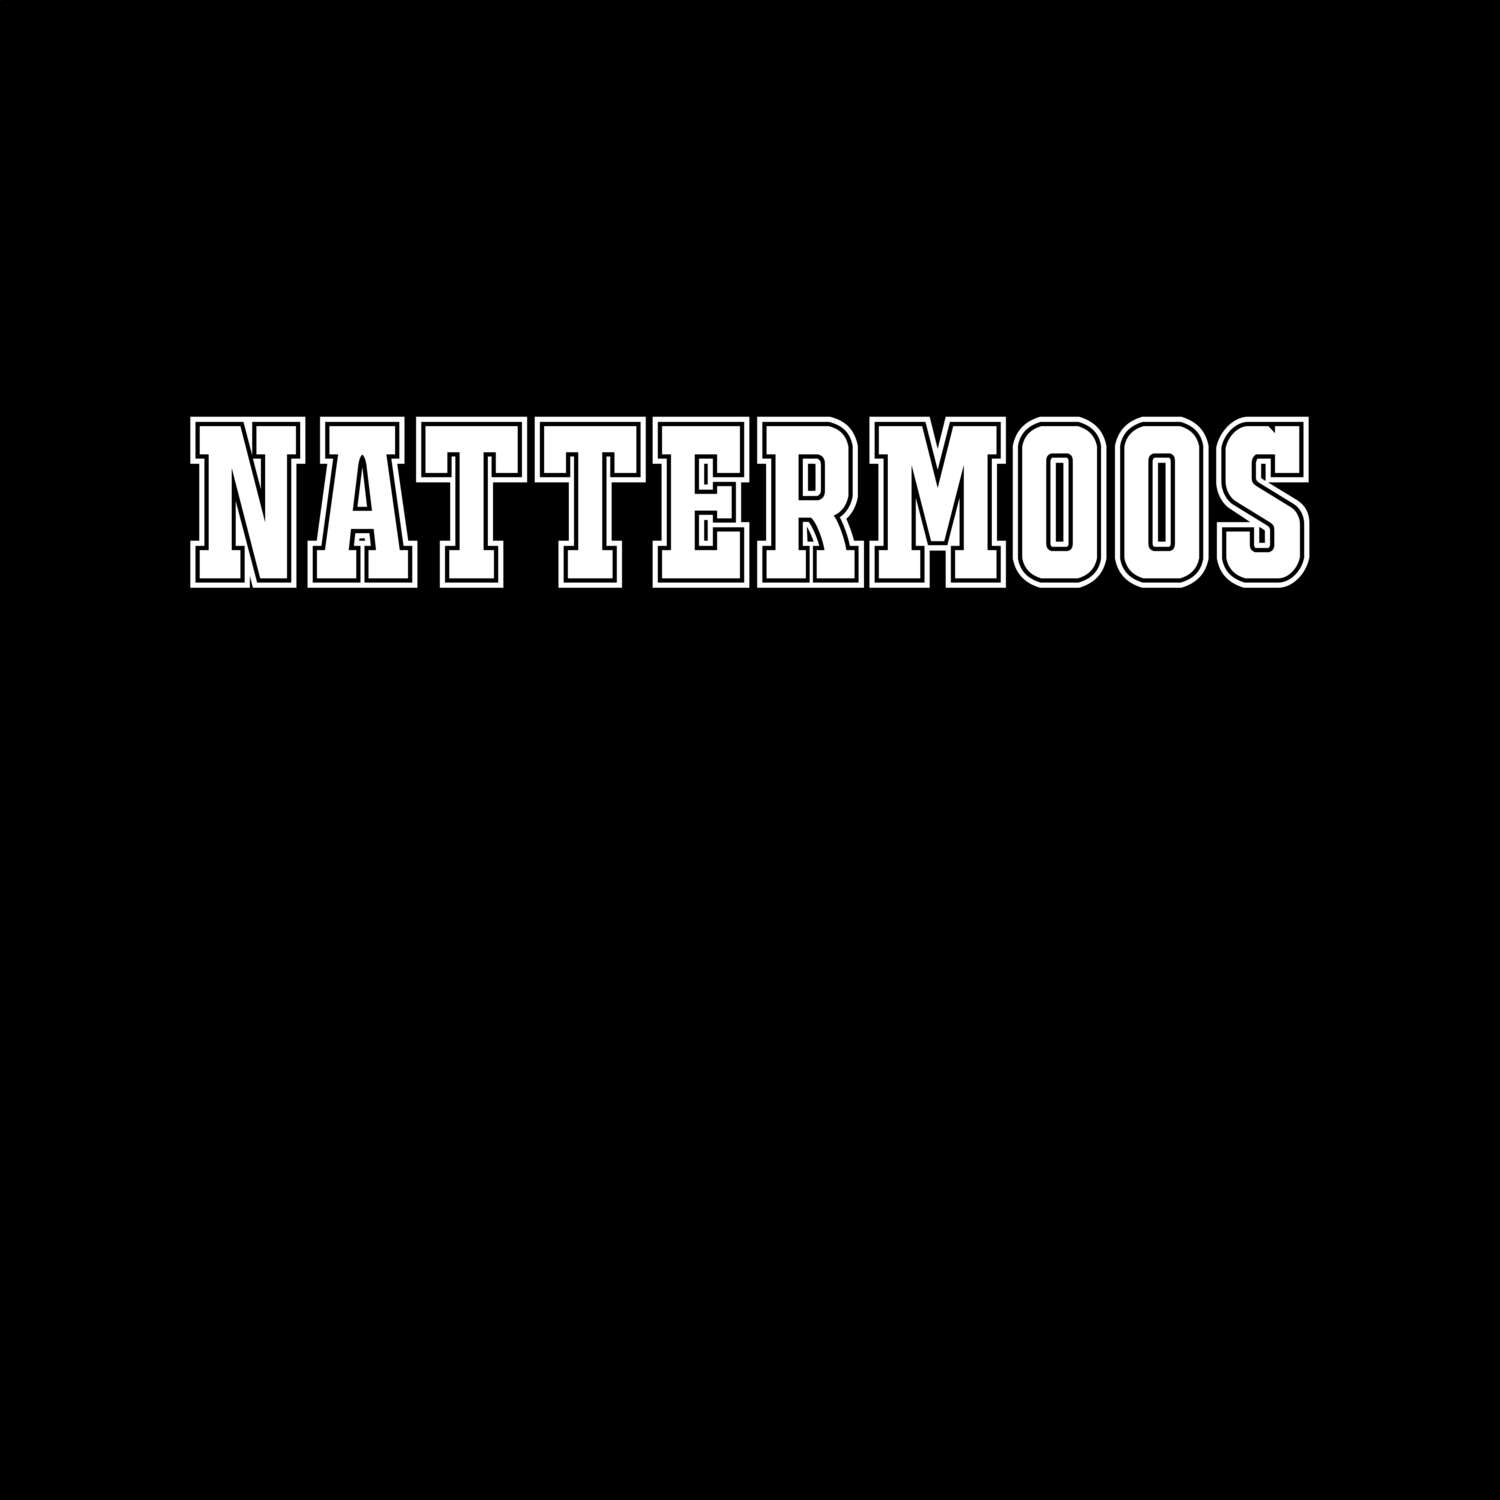 Nattermoos T-Shirt »Classic«